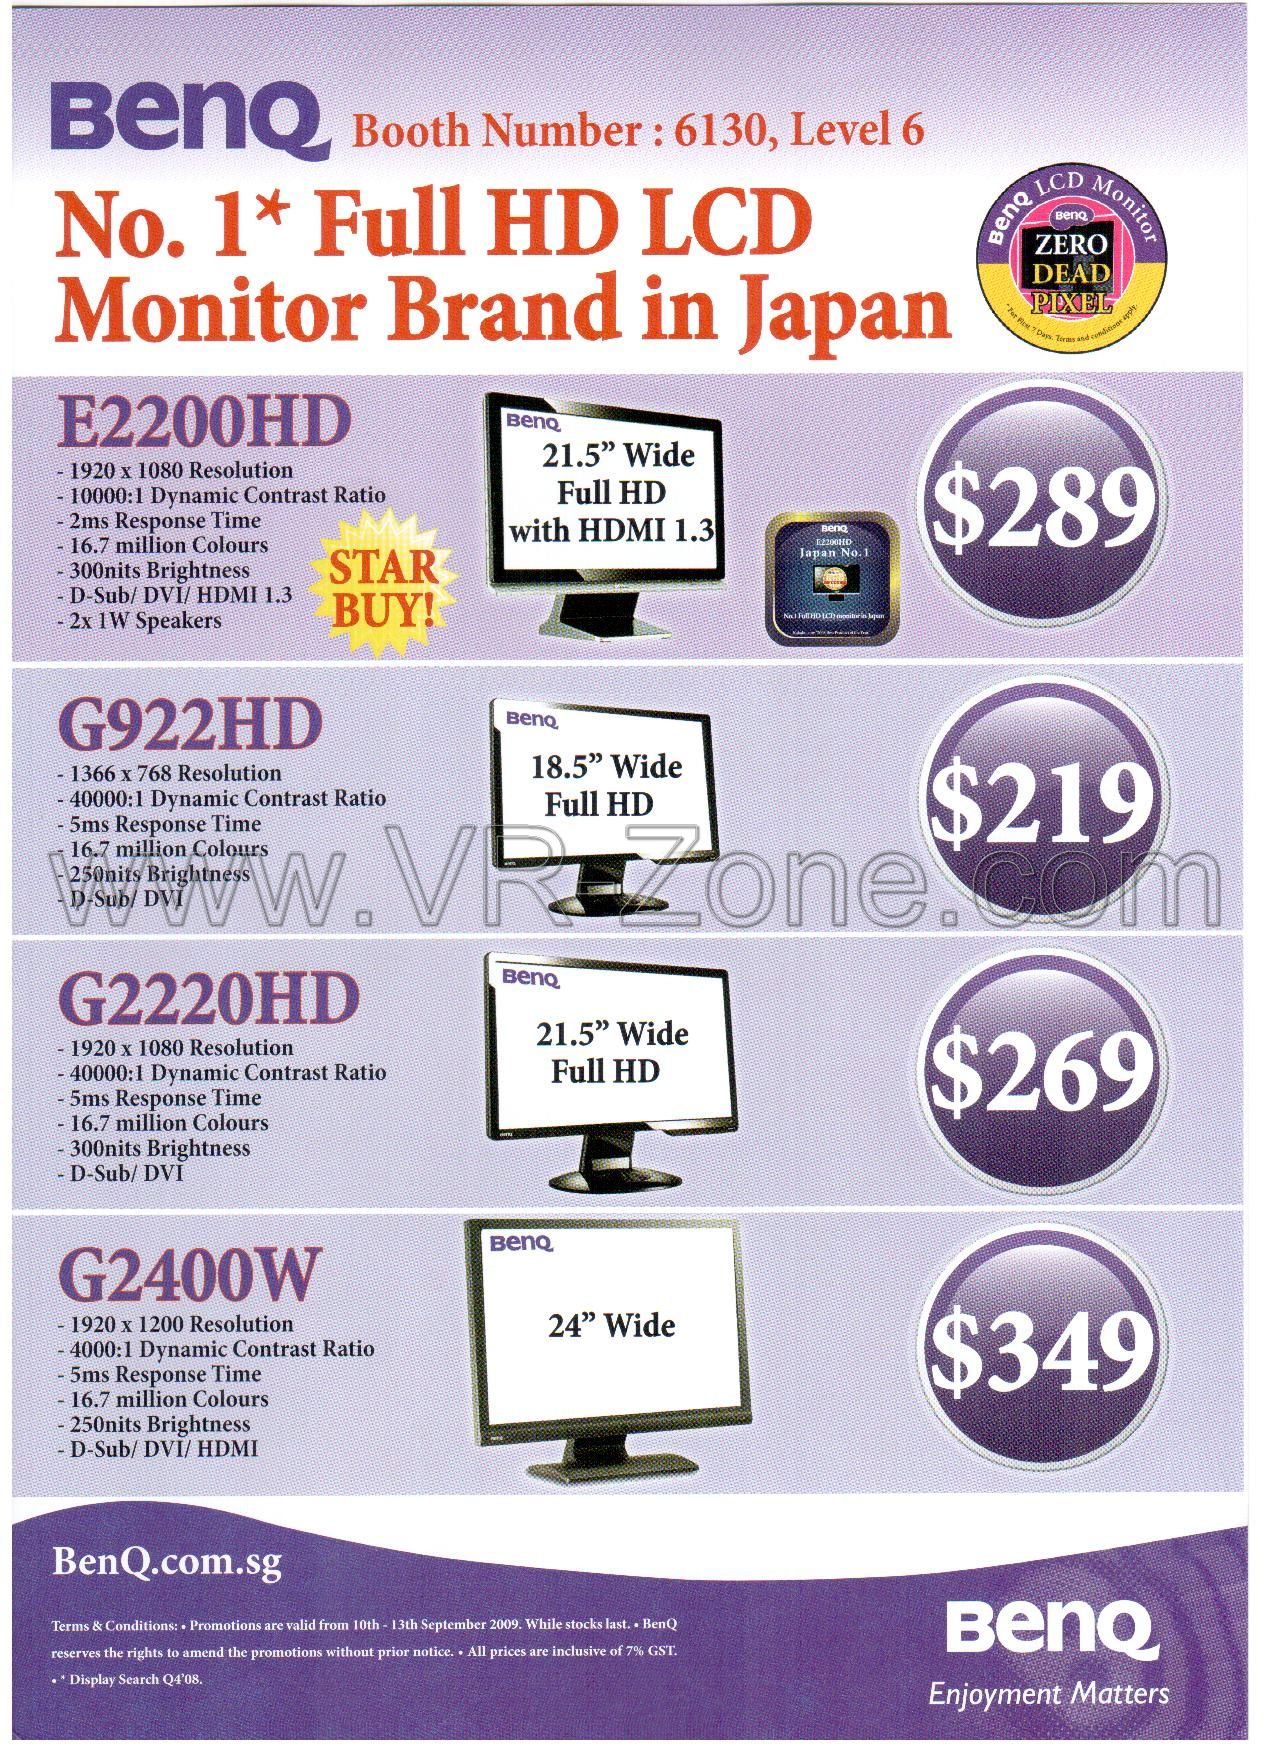 Comex 2009 price list image brochure of BenQ LCD Monitors E2200HD G922HD G2220HD G2400W